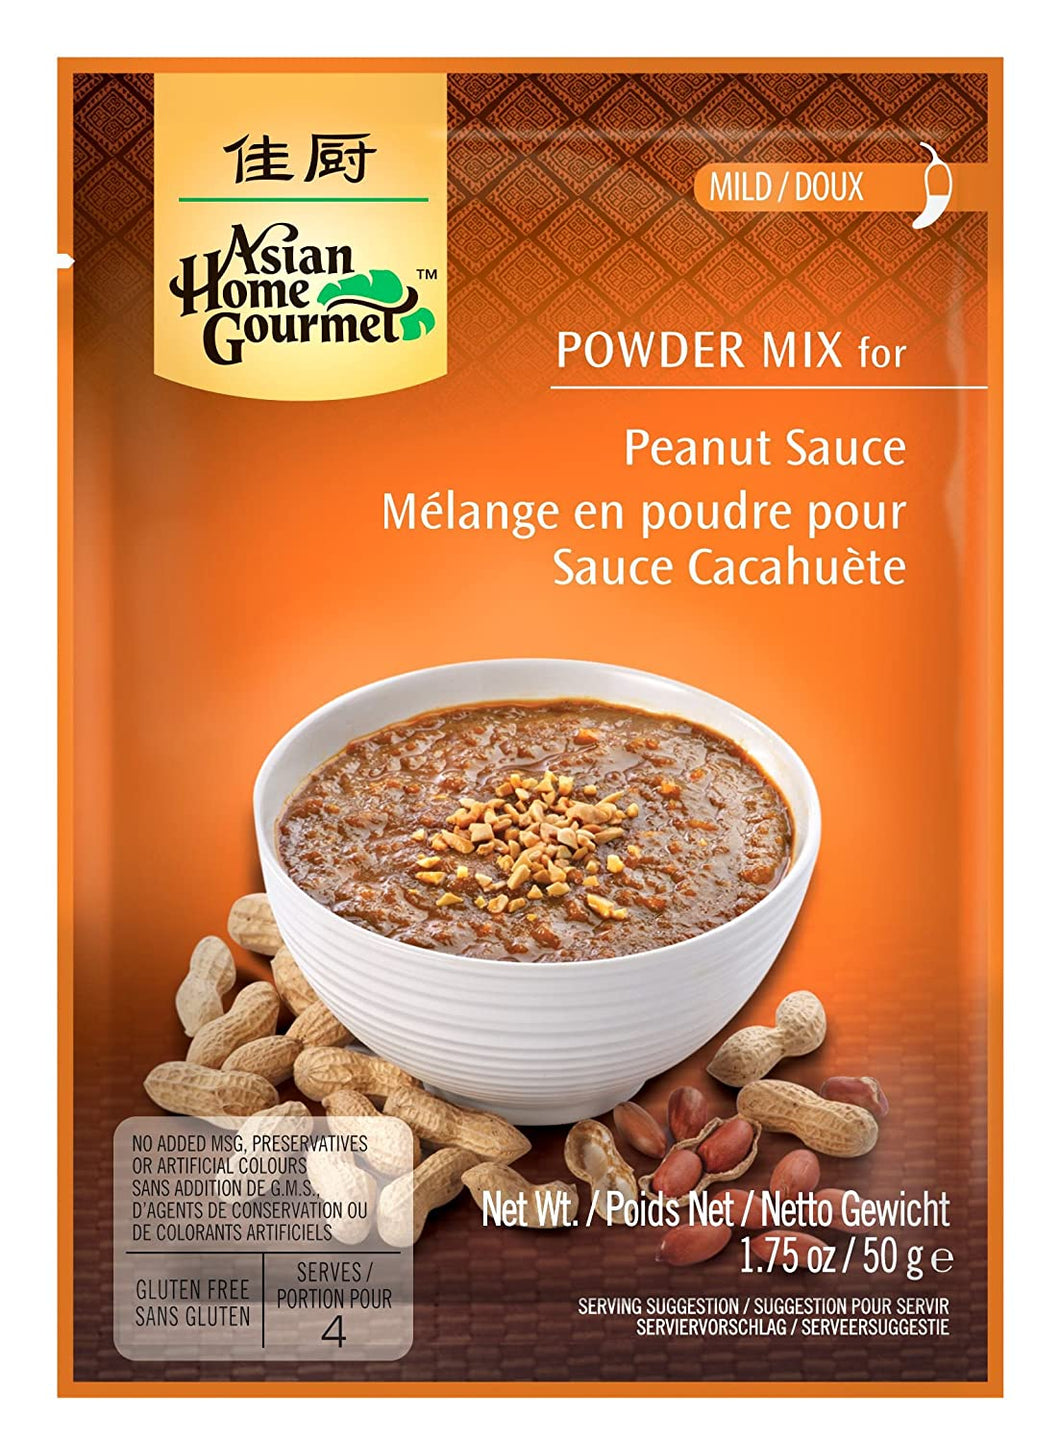 Asian Home Gourmet Powder Mix for Peanut Sauce